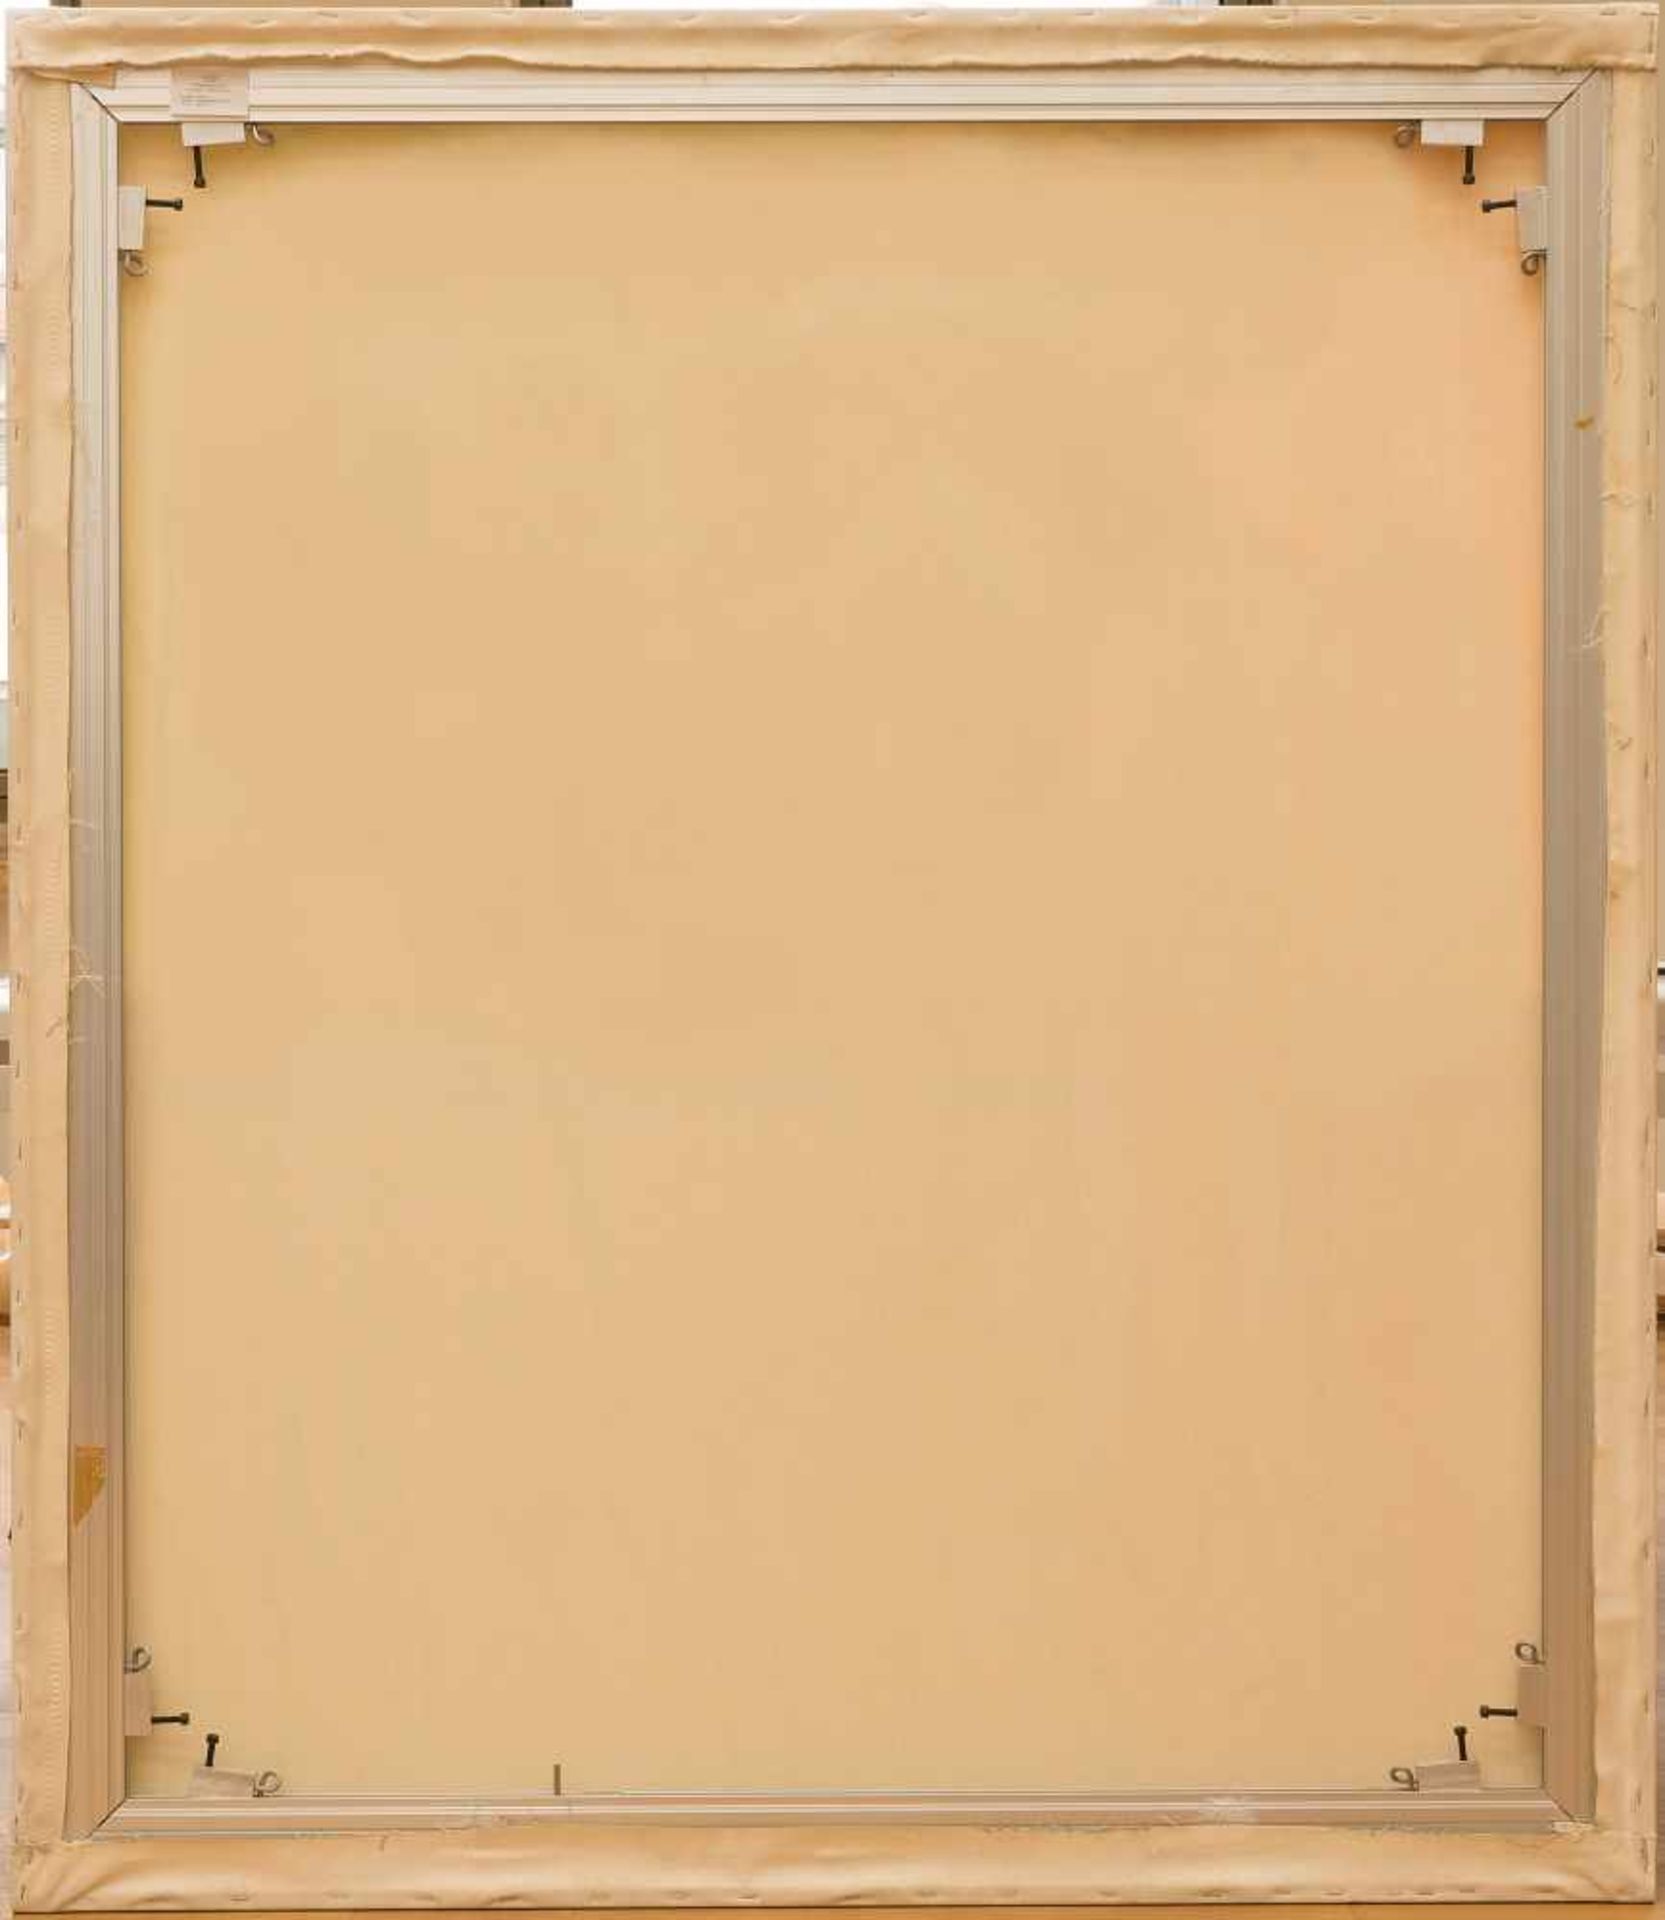 Günther Förg Ohne Titel Acryl und Ölpastellkreide auf Leinwand. (19)93. Ca. 150,5 x 130,5 cm. - Image 3 of 3